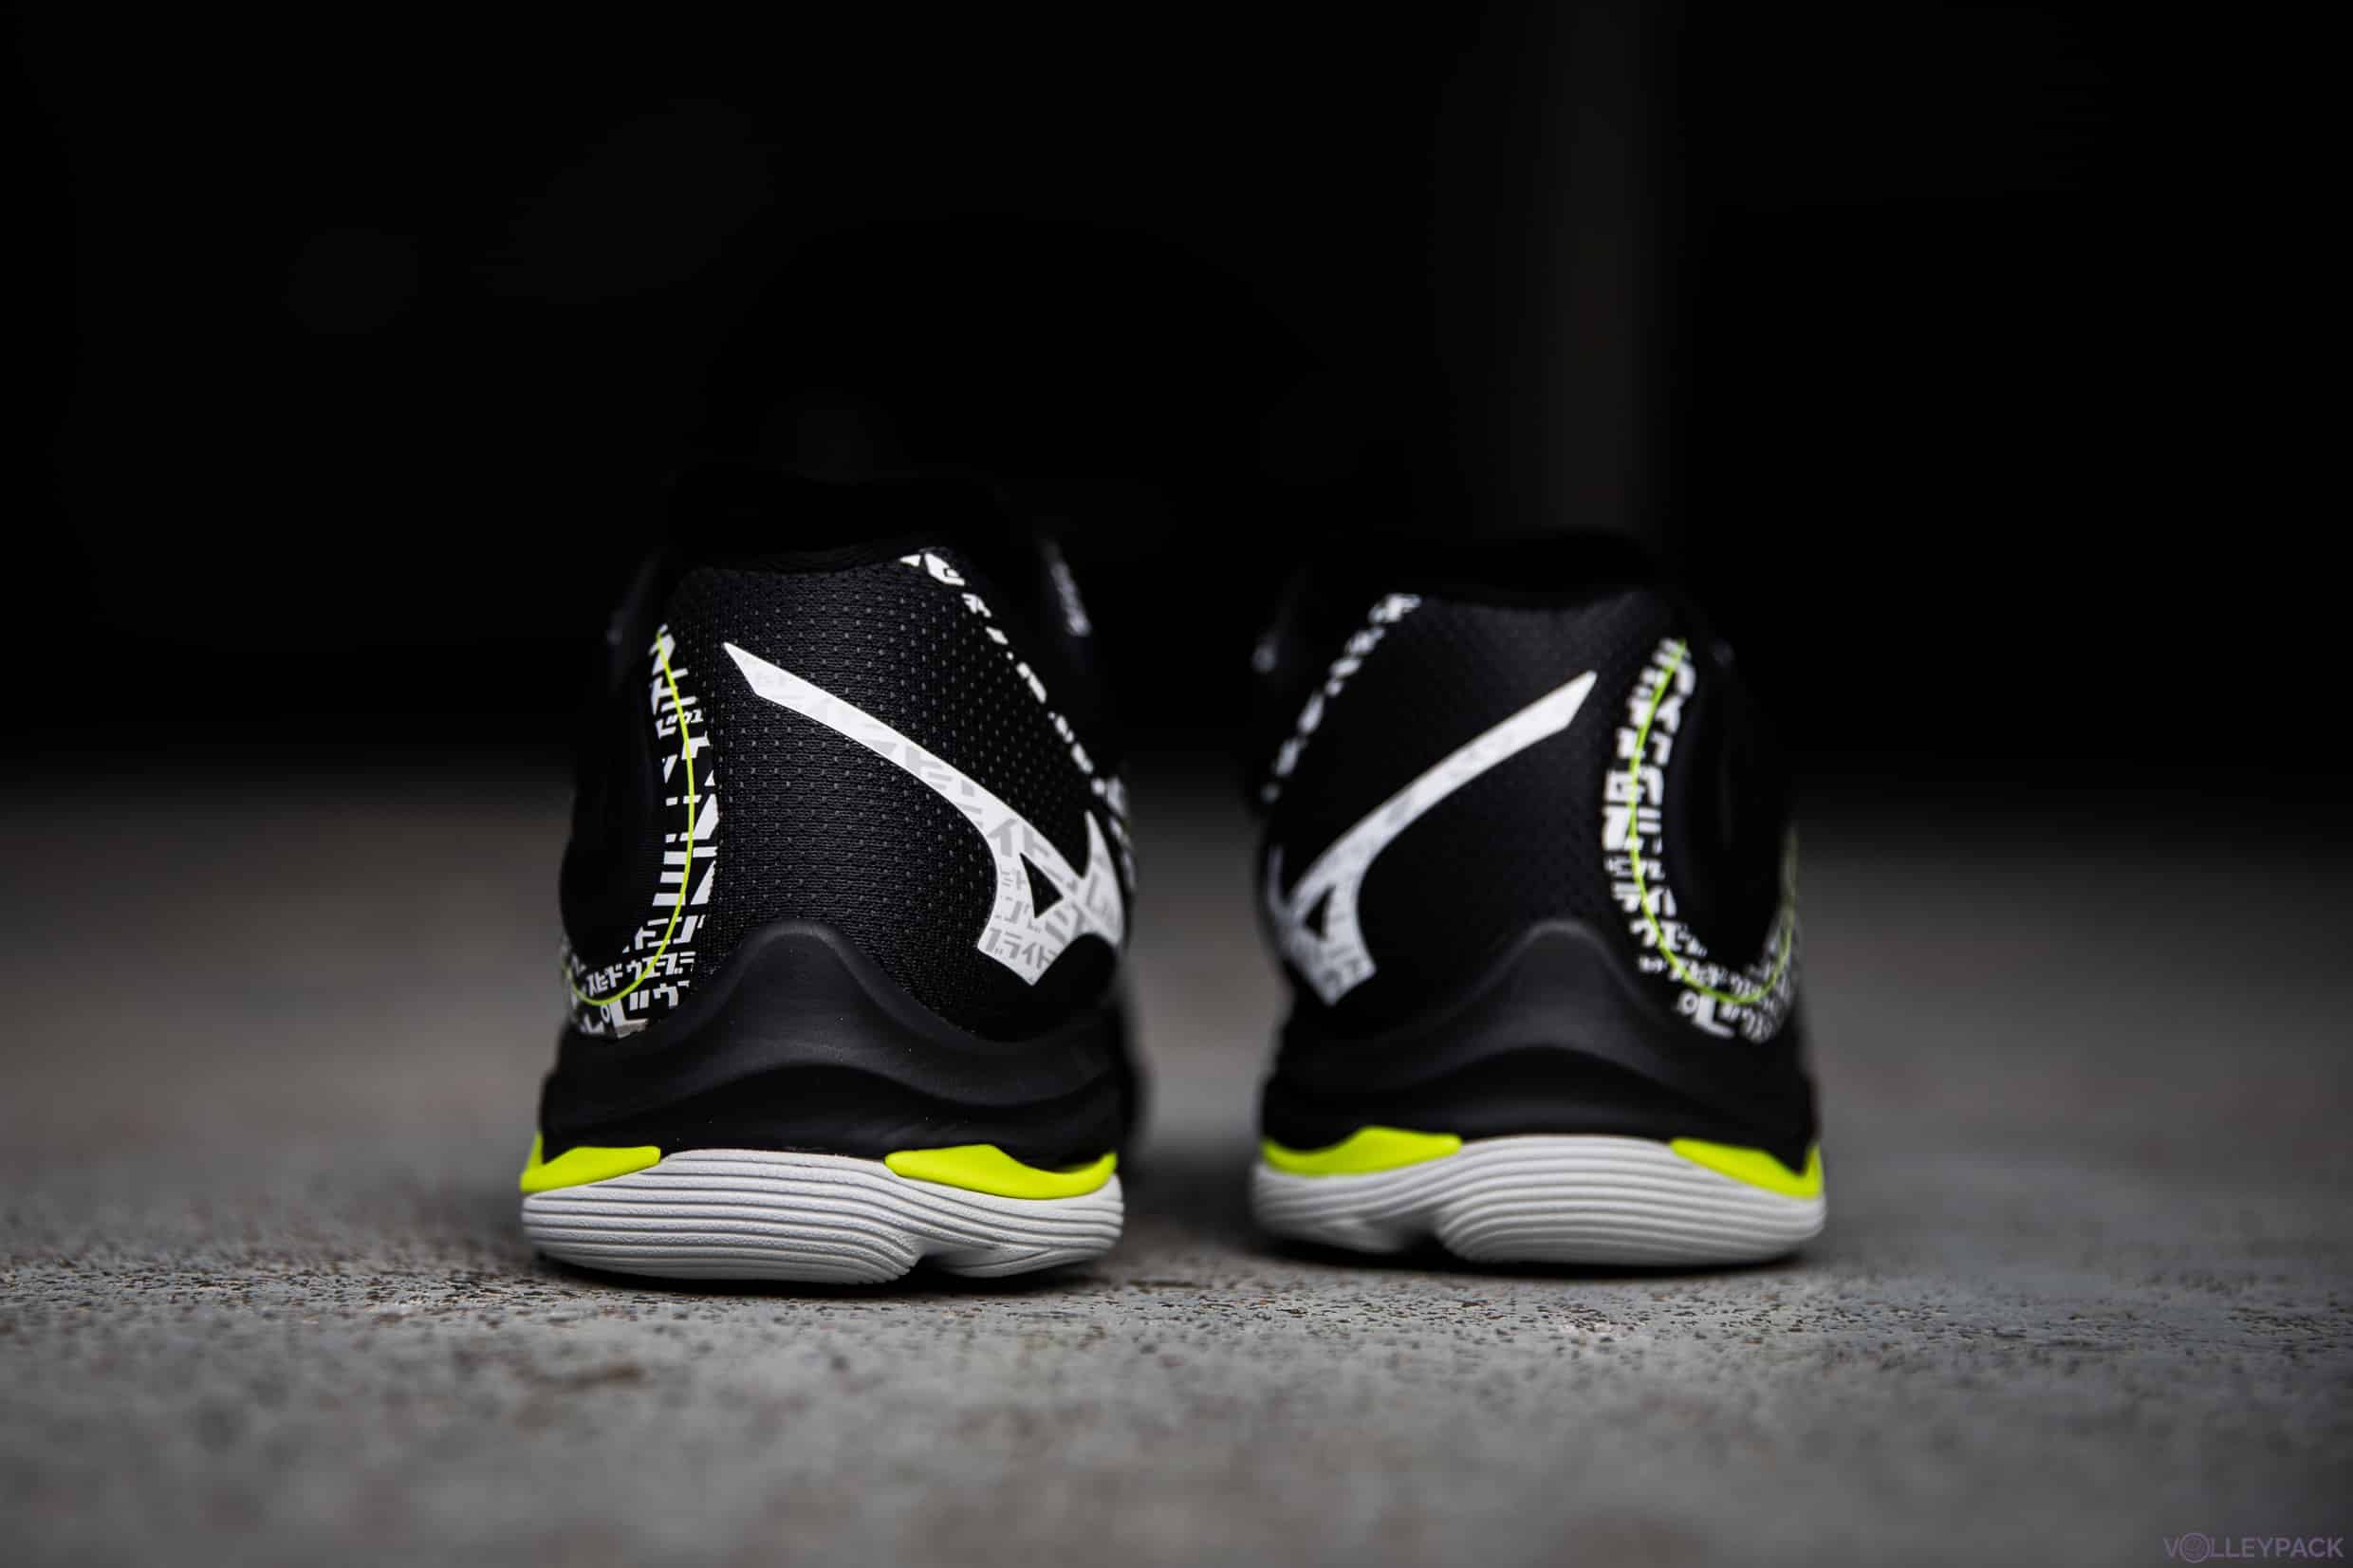 test-volleypack-chaussures-de-volley-mizuno-wave-lightning-Z6-2020-12